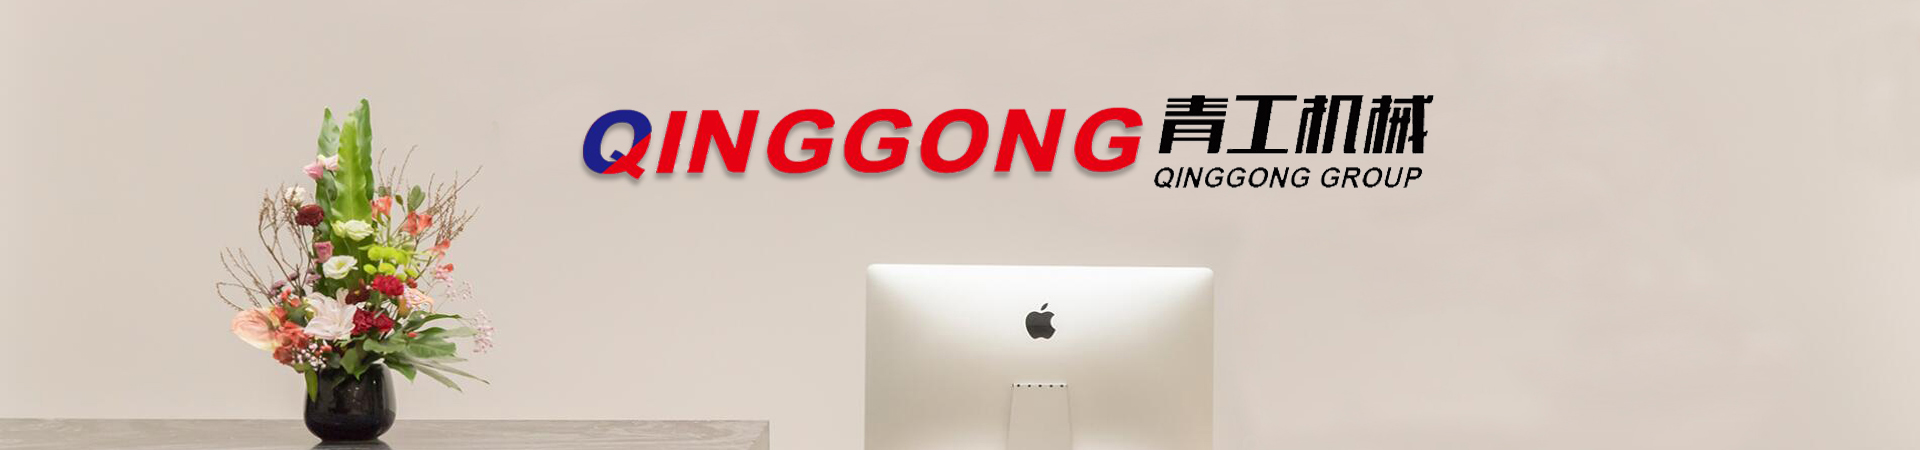 Cyonggong firmowy baner